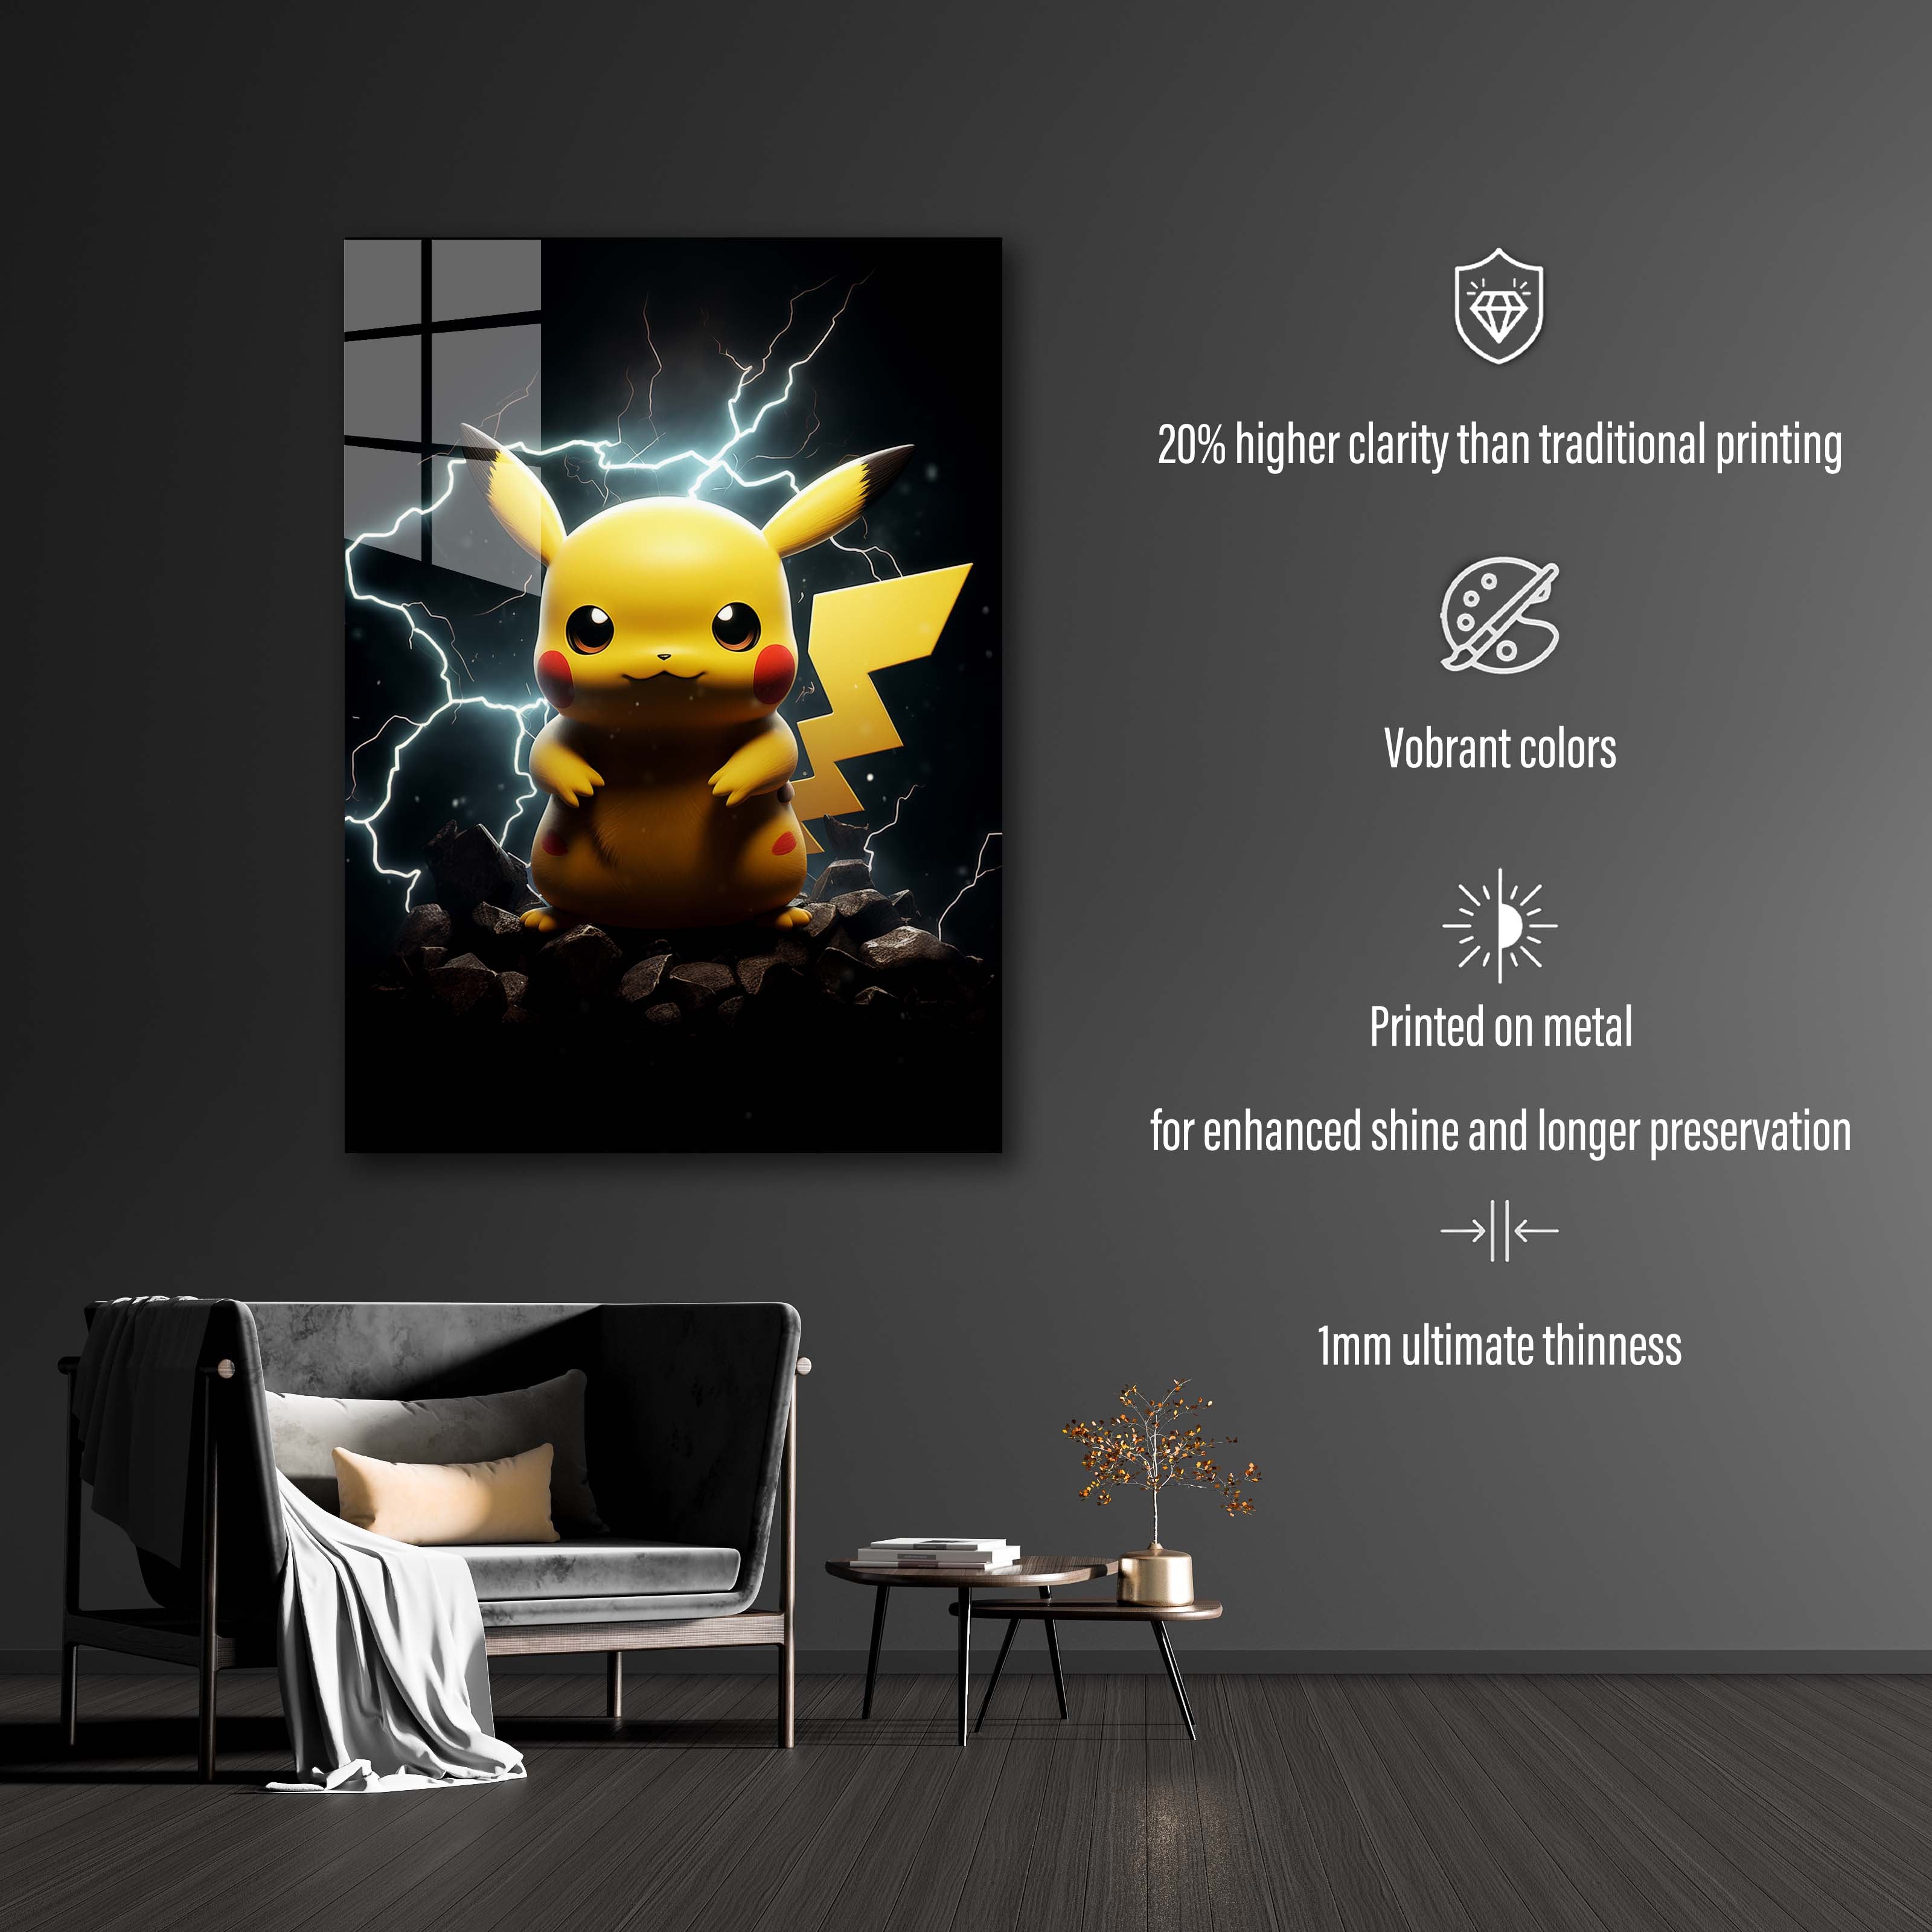 Pikachu-designed by @Fluency Room